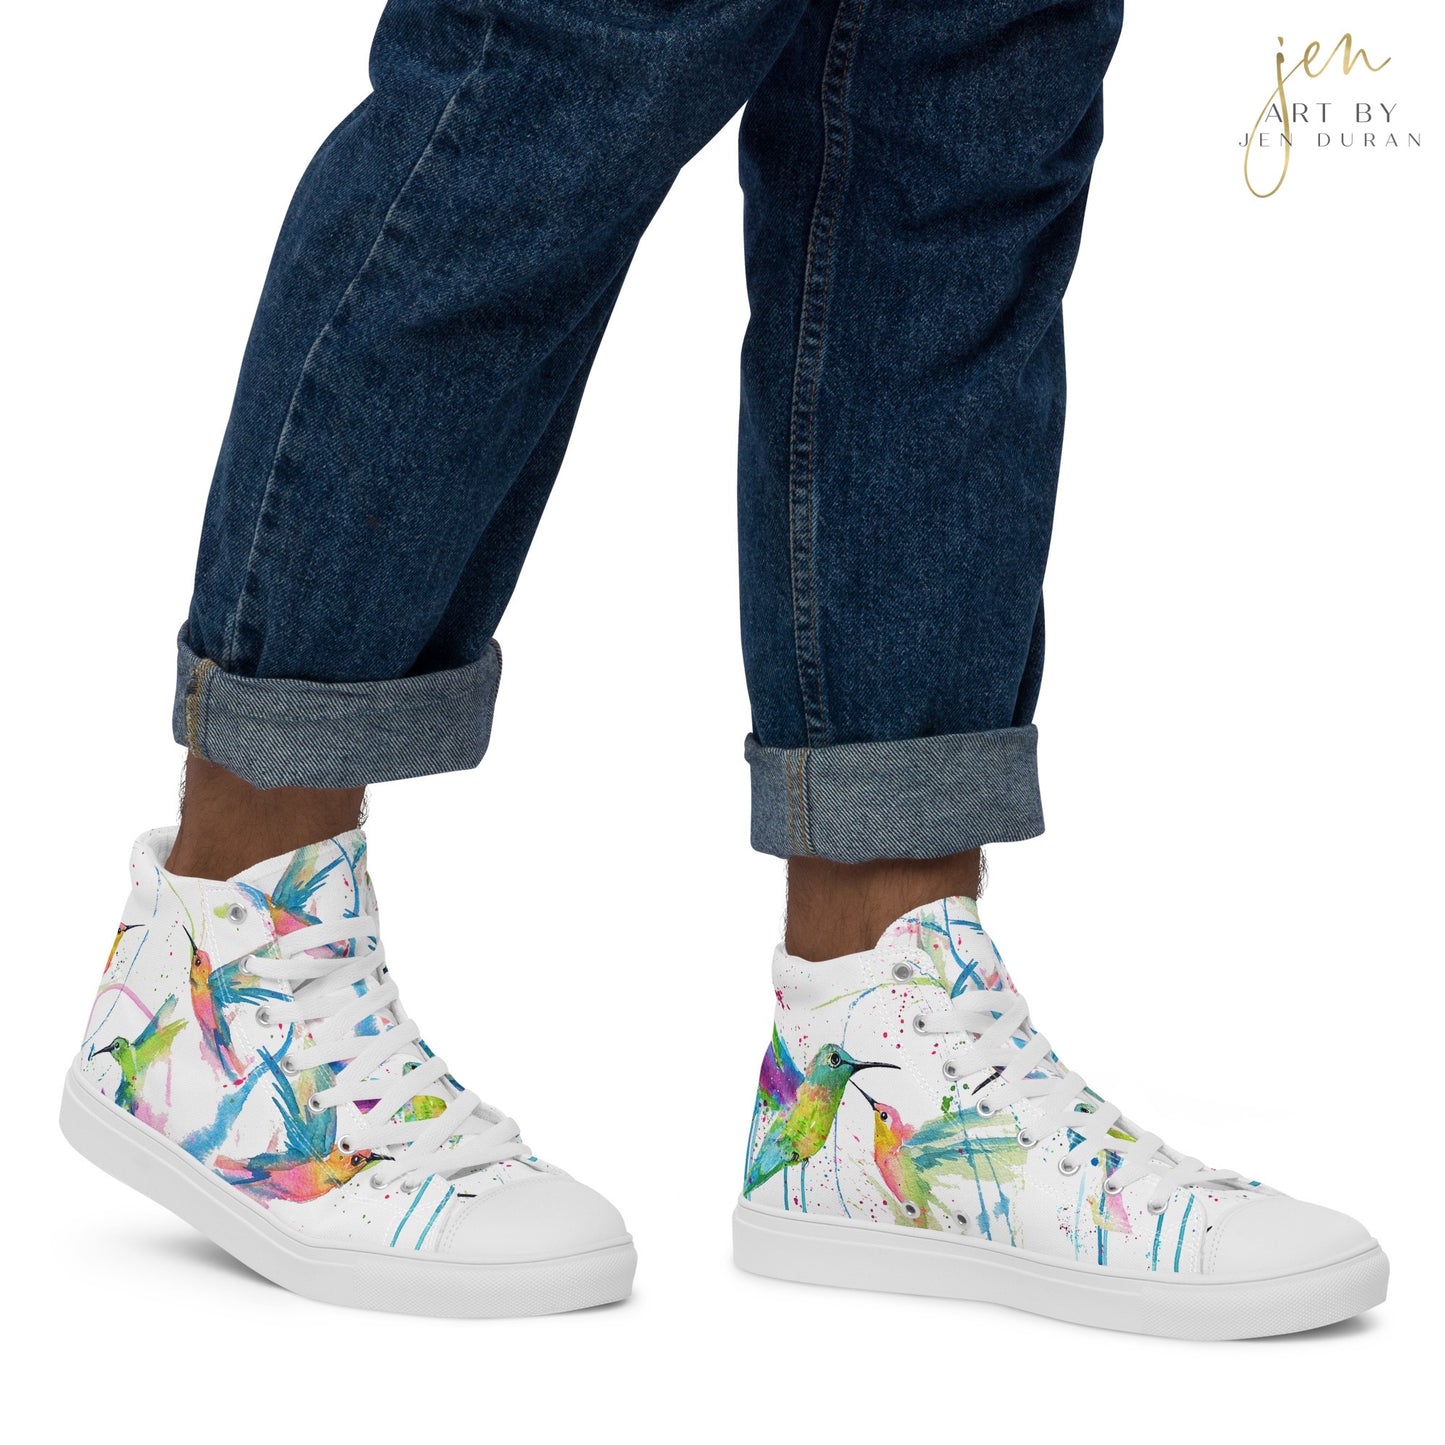 Men’s High Top Canvas Shoes | High Top Sneakers | Watercolor Hummingbird Design